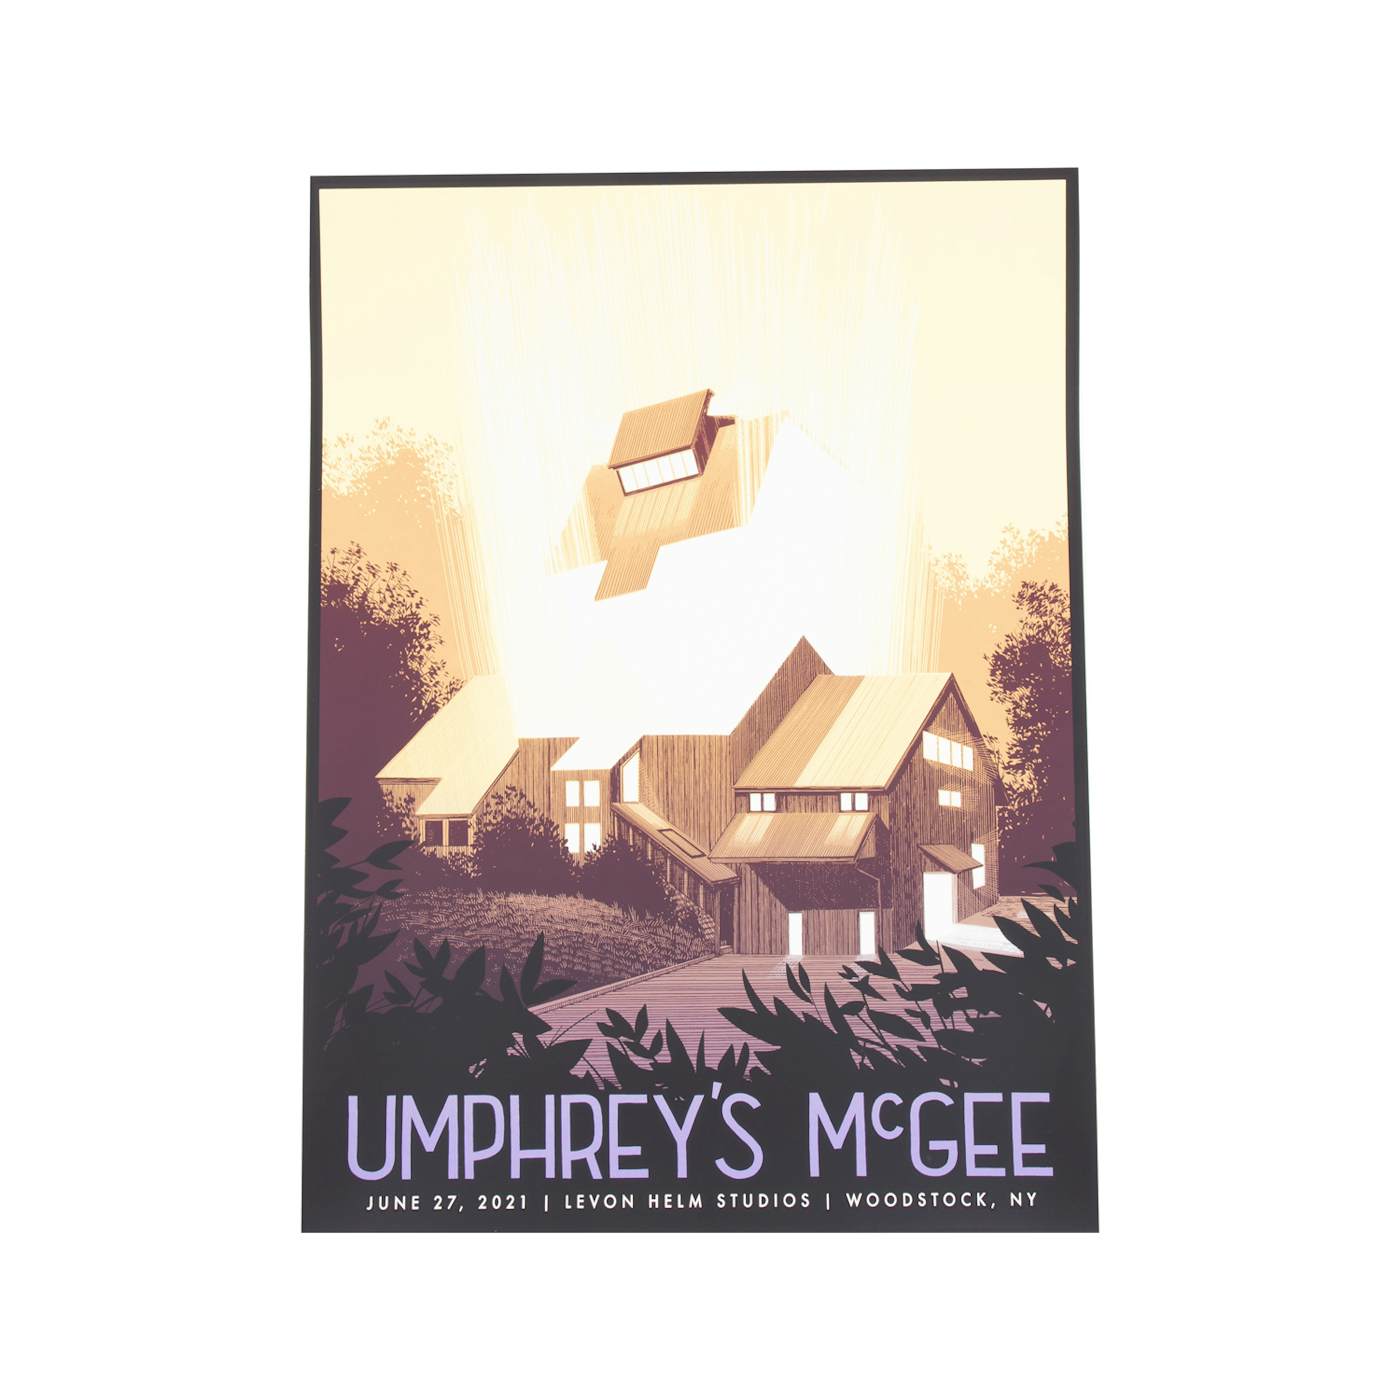 Umphrey's McGee Levon Helm Studios Livestream Poster